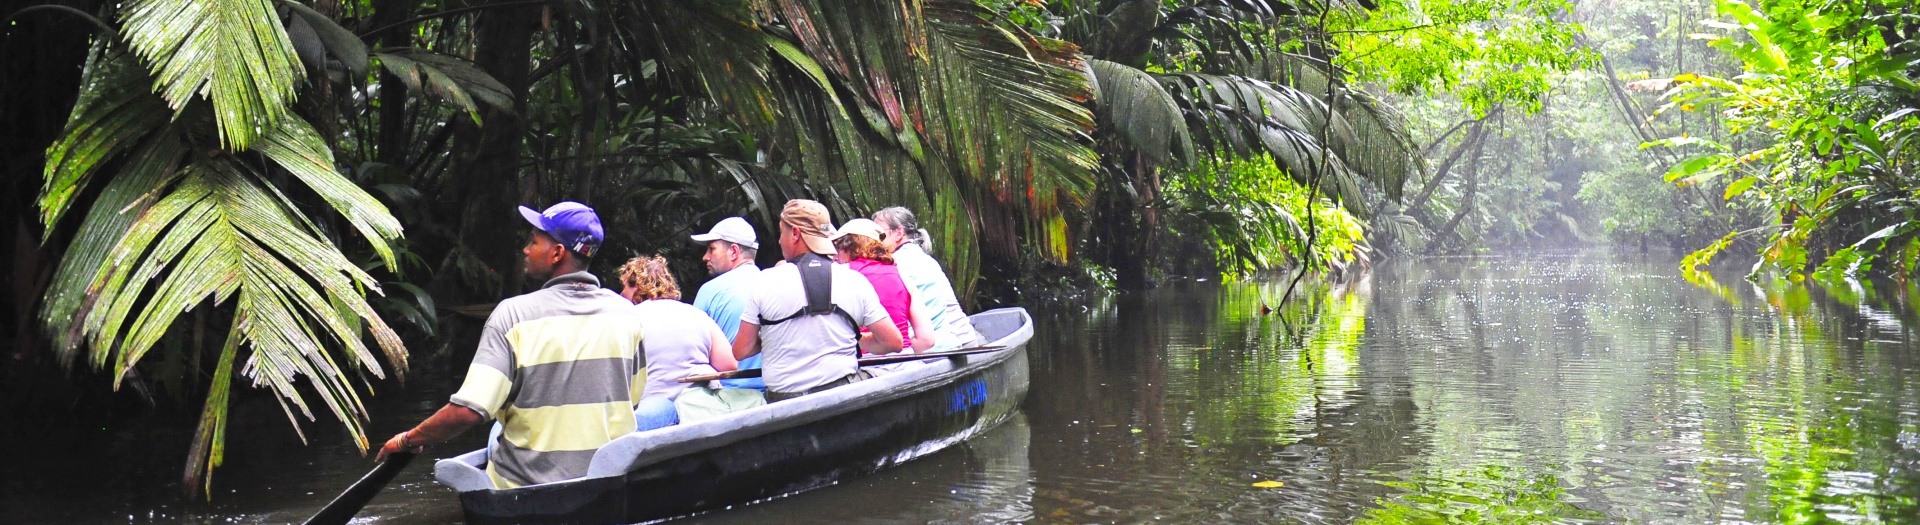 Voyages multi activités au Costa Rica